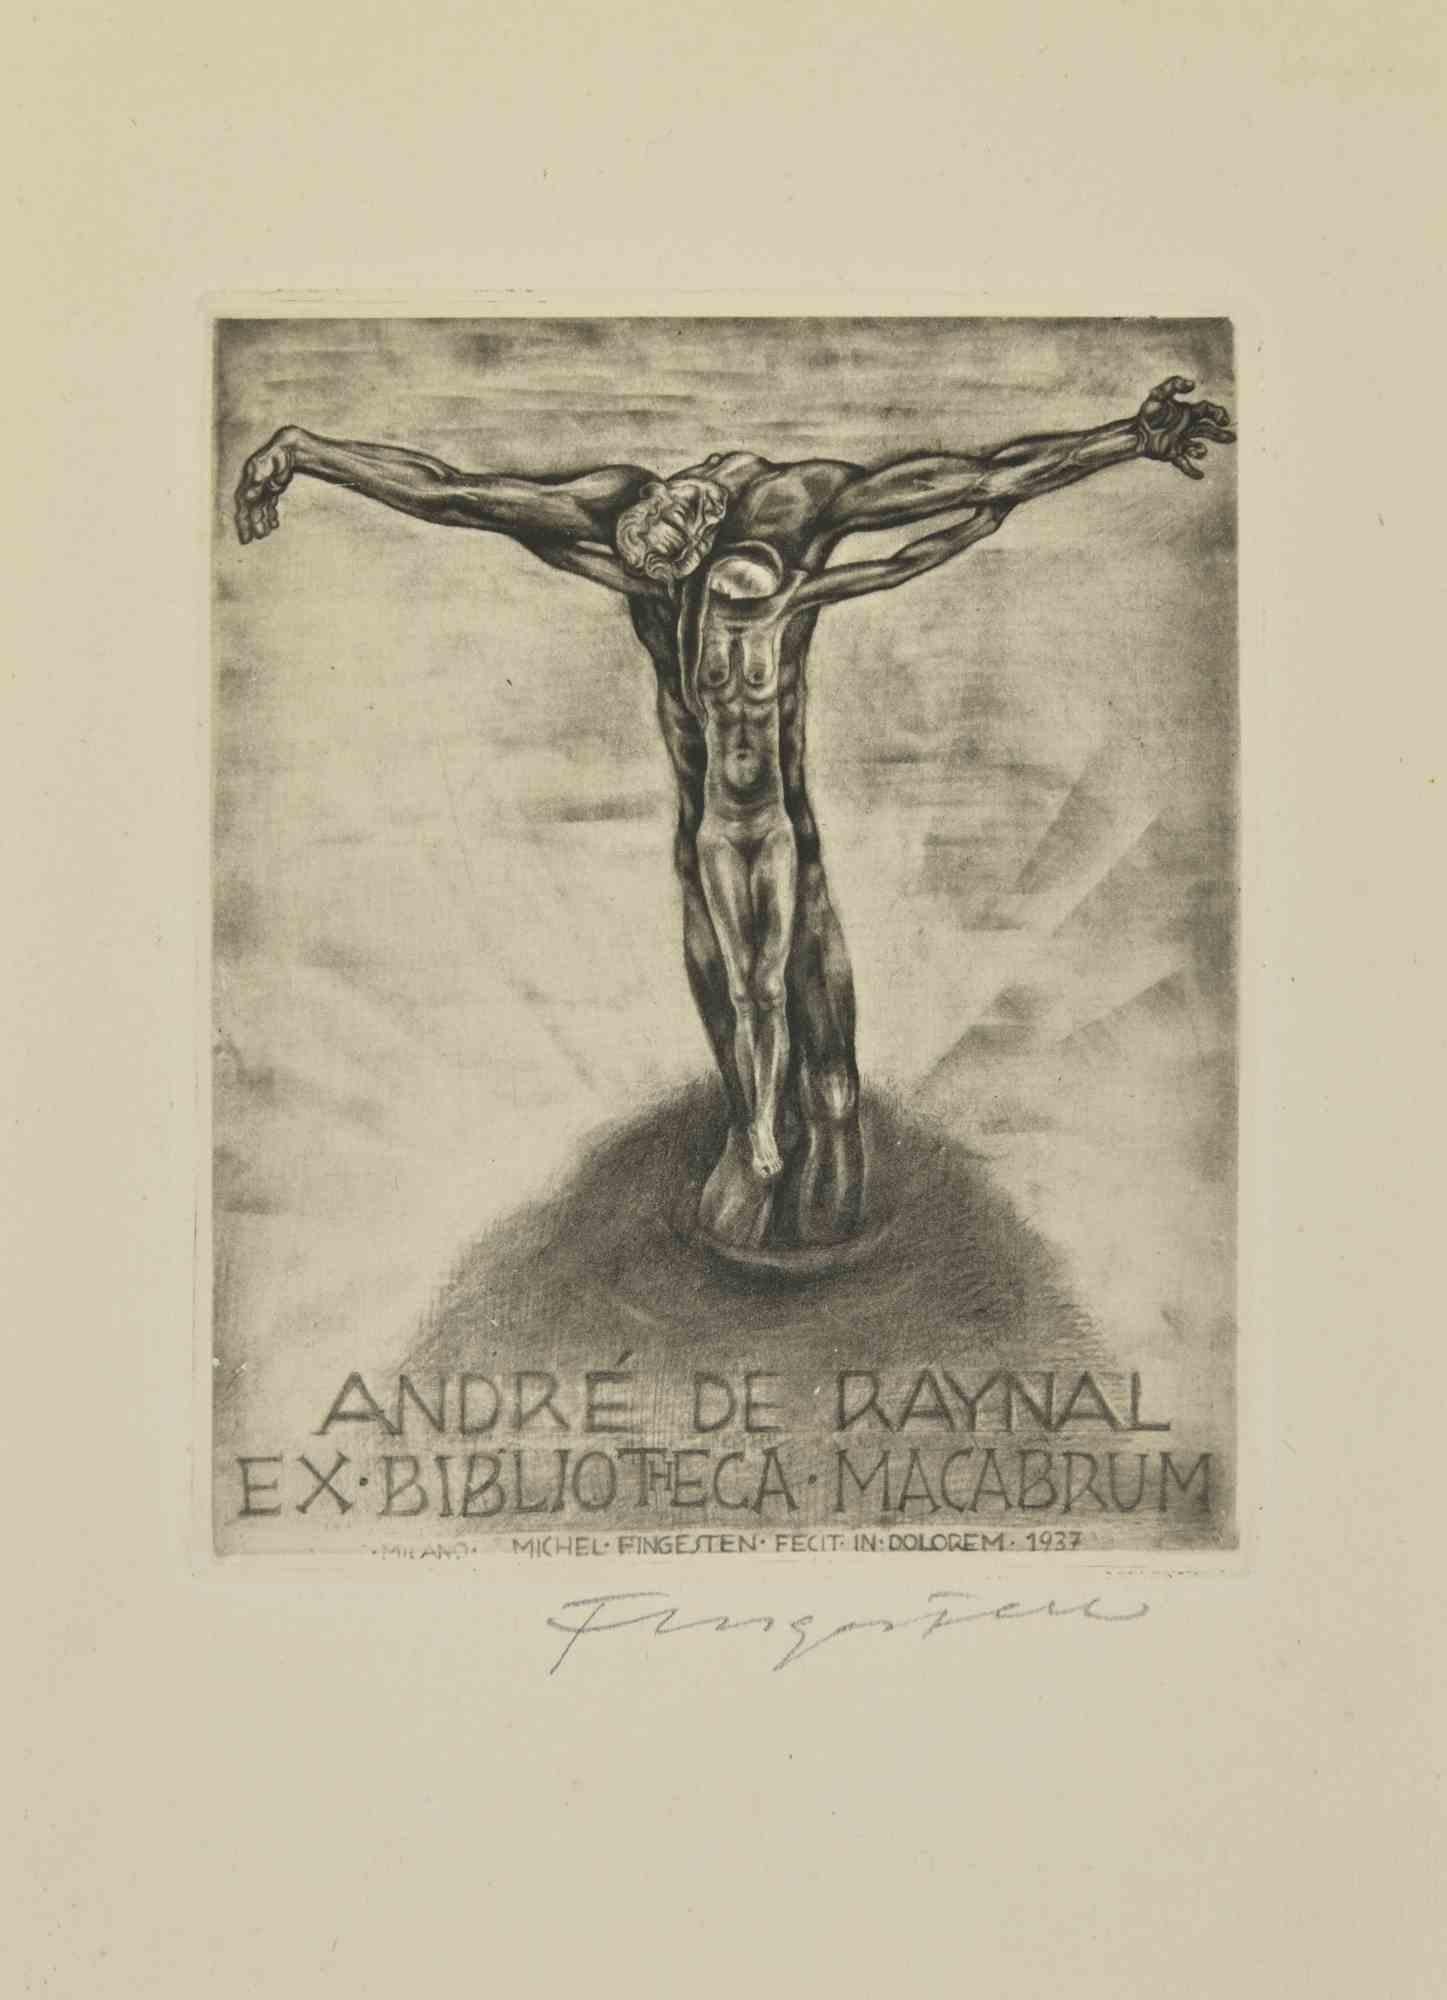 Michel Fingesten Figurative Print - Ex Libris-André de Raynal-Ex Biblioteca Macabru- Etching by M. Fingesten - 1937